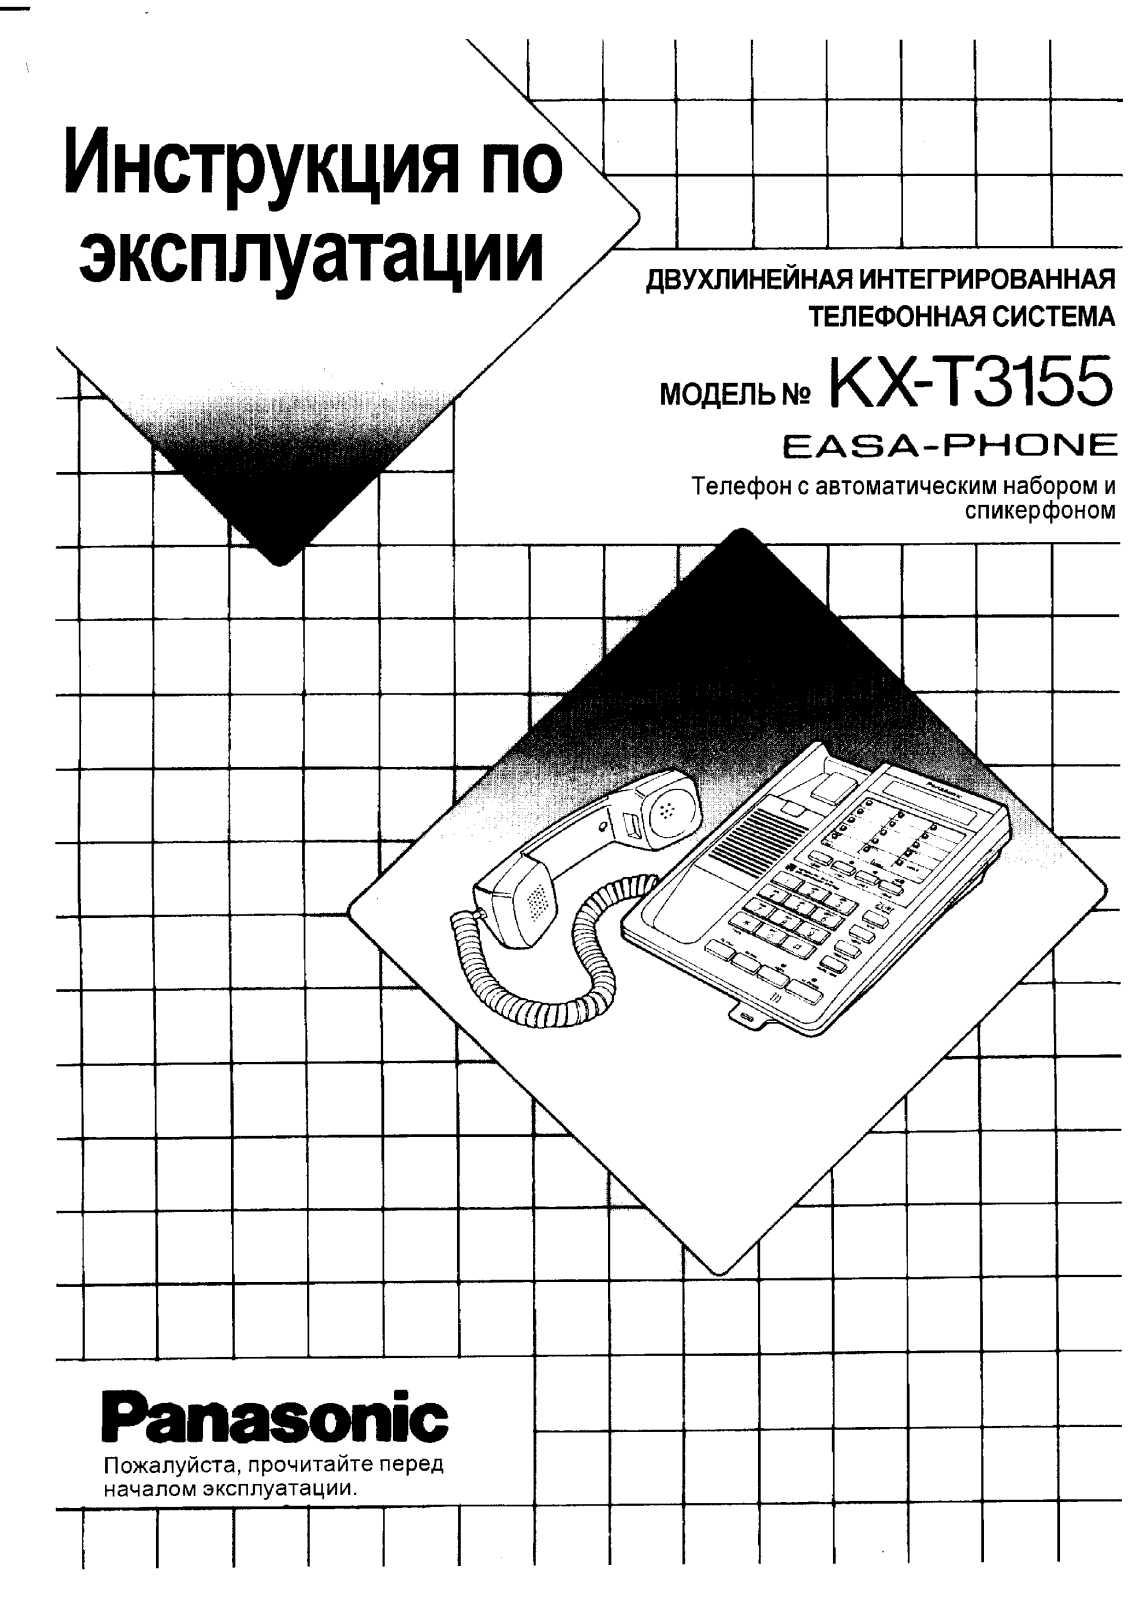 Panasonic KX-T3155 User Manual